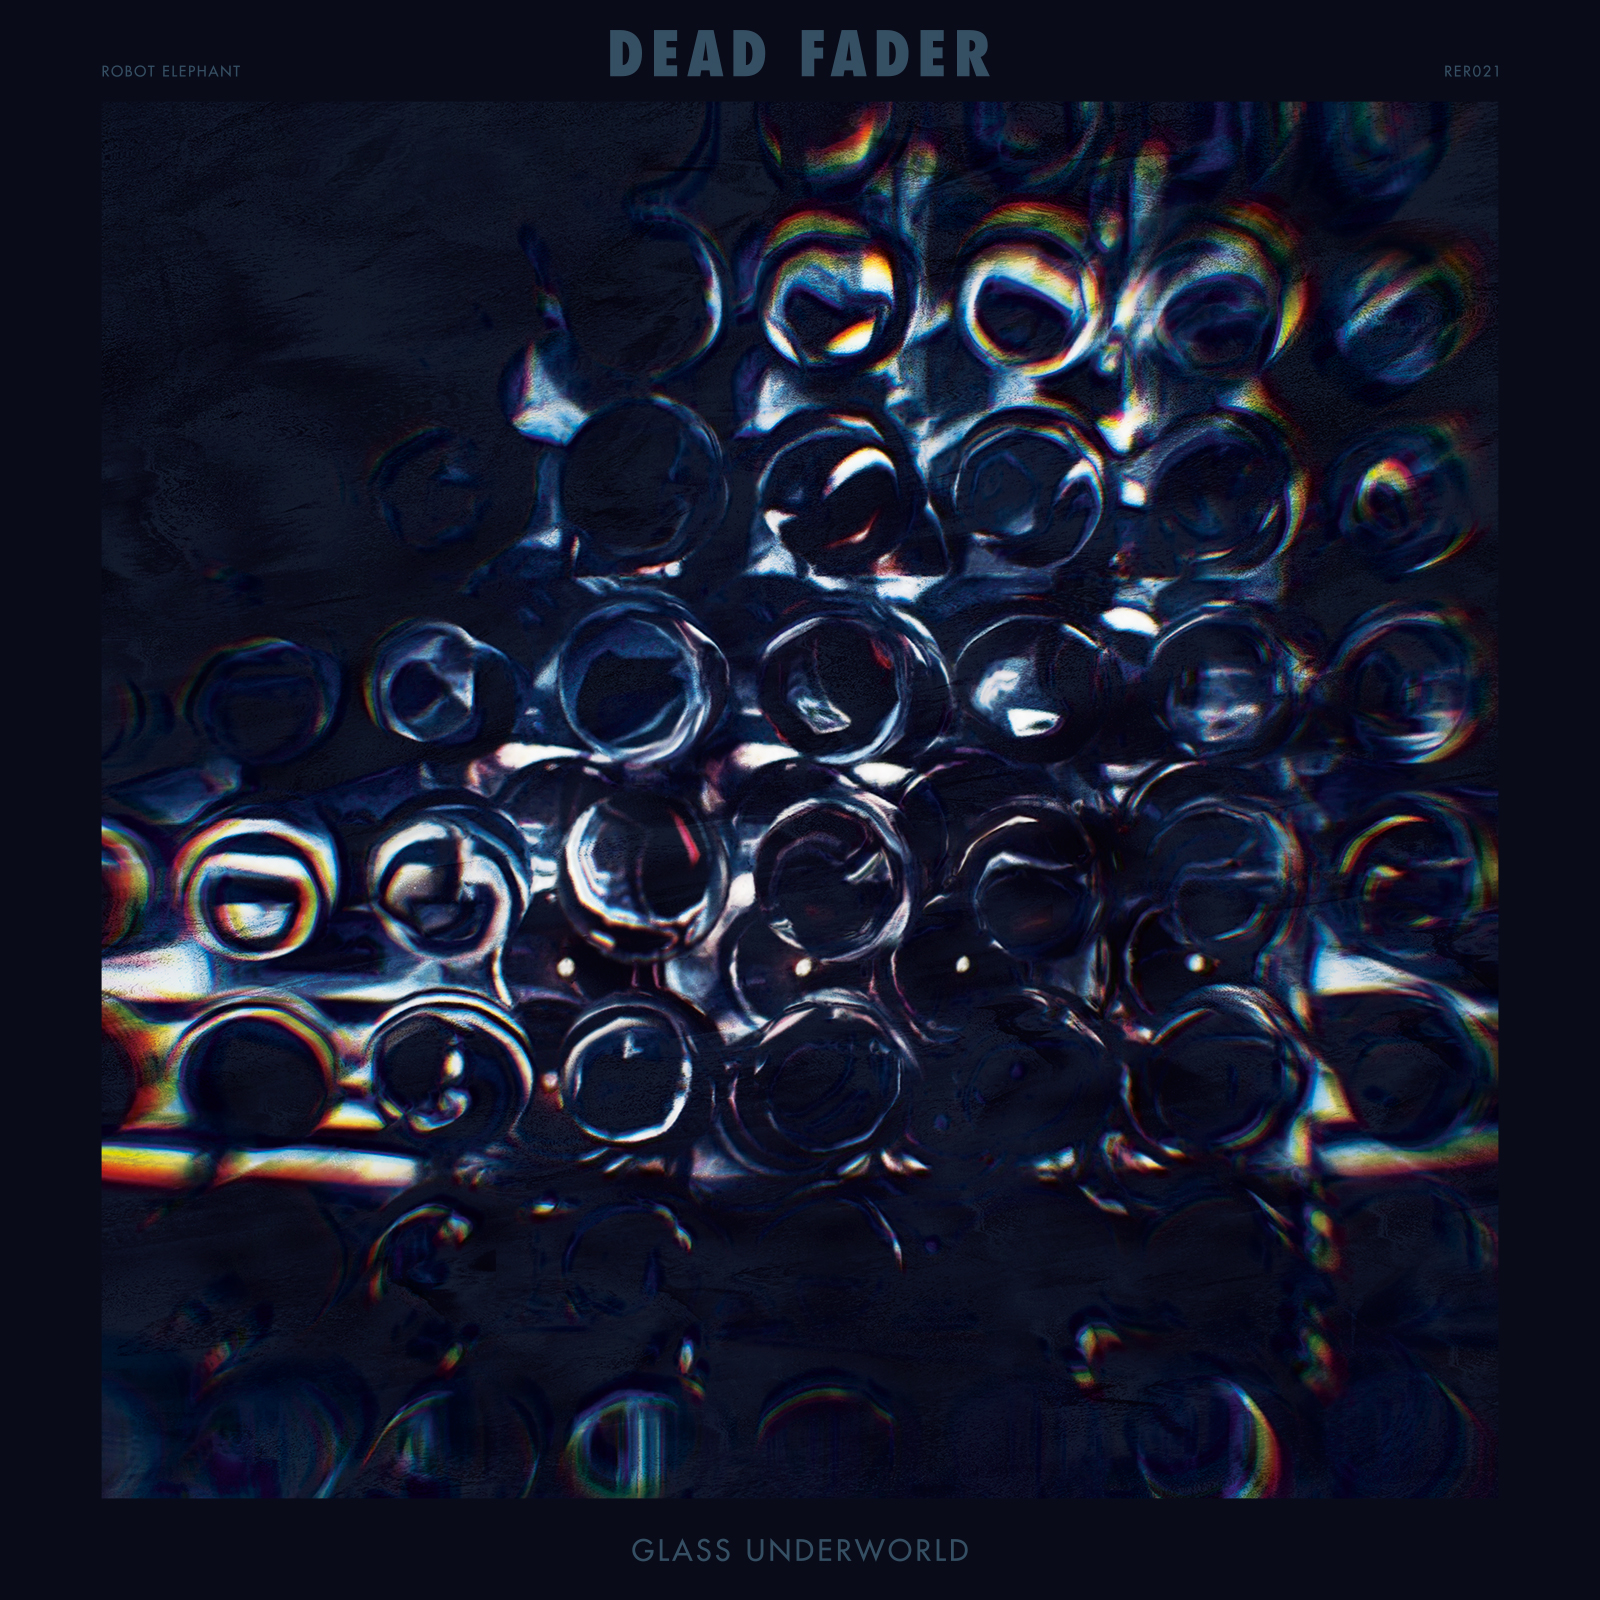 image cover: Dead Fader - Glass Underworld [RER021]